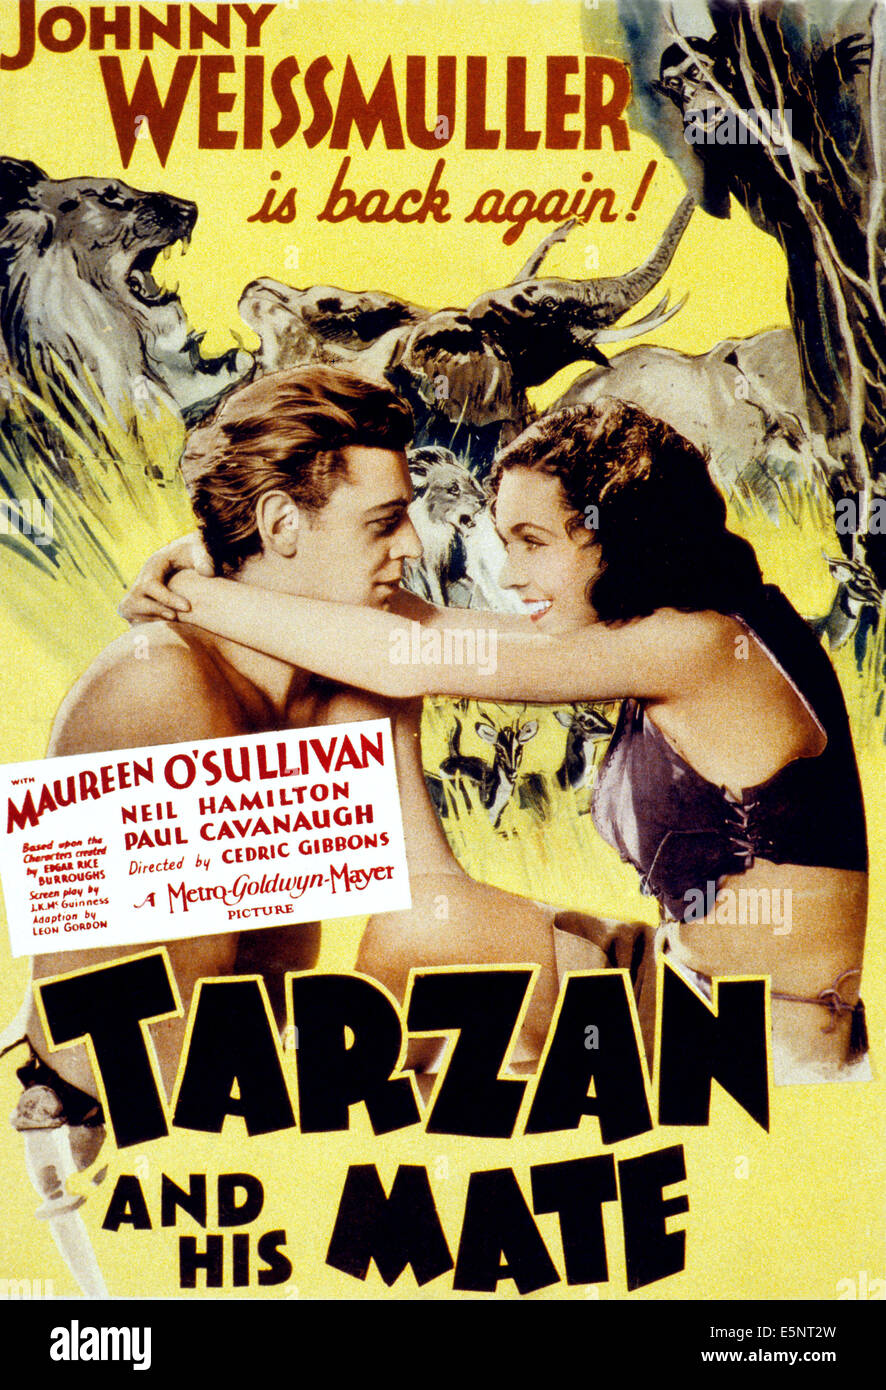 TARZAN AND HIS MATE, Johnny Weissmuller, Maureen O'Sullivan, 1934 Stock Photo